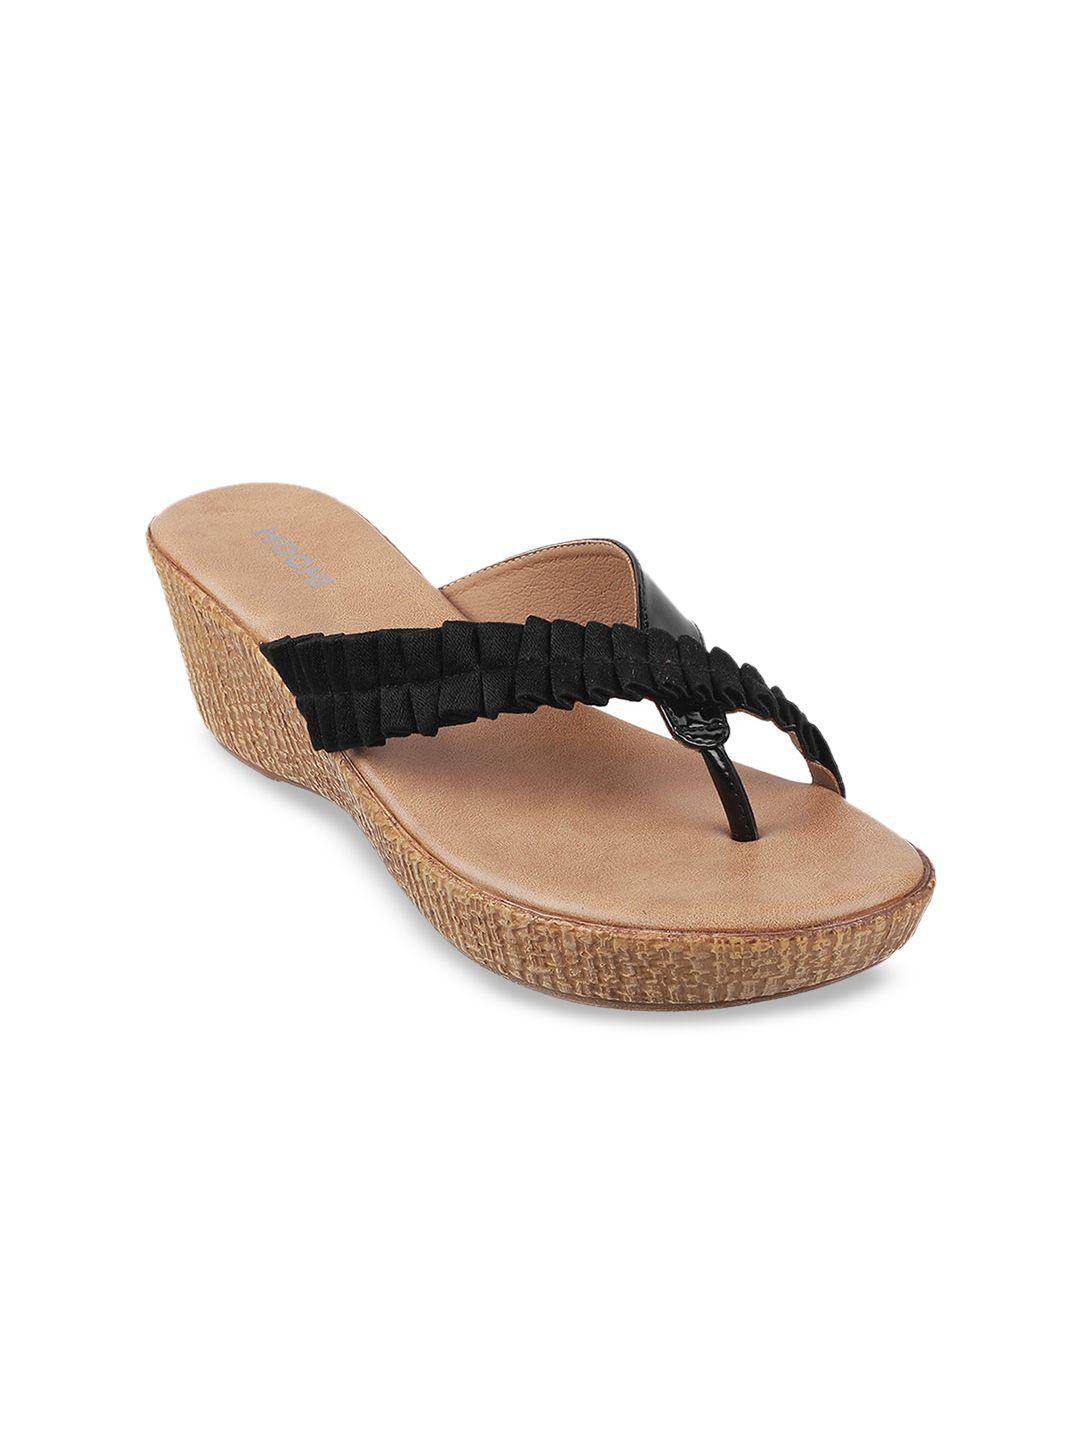 mochi black colourblocked wedge sandals